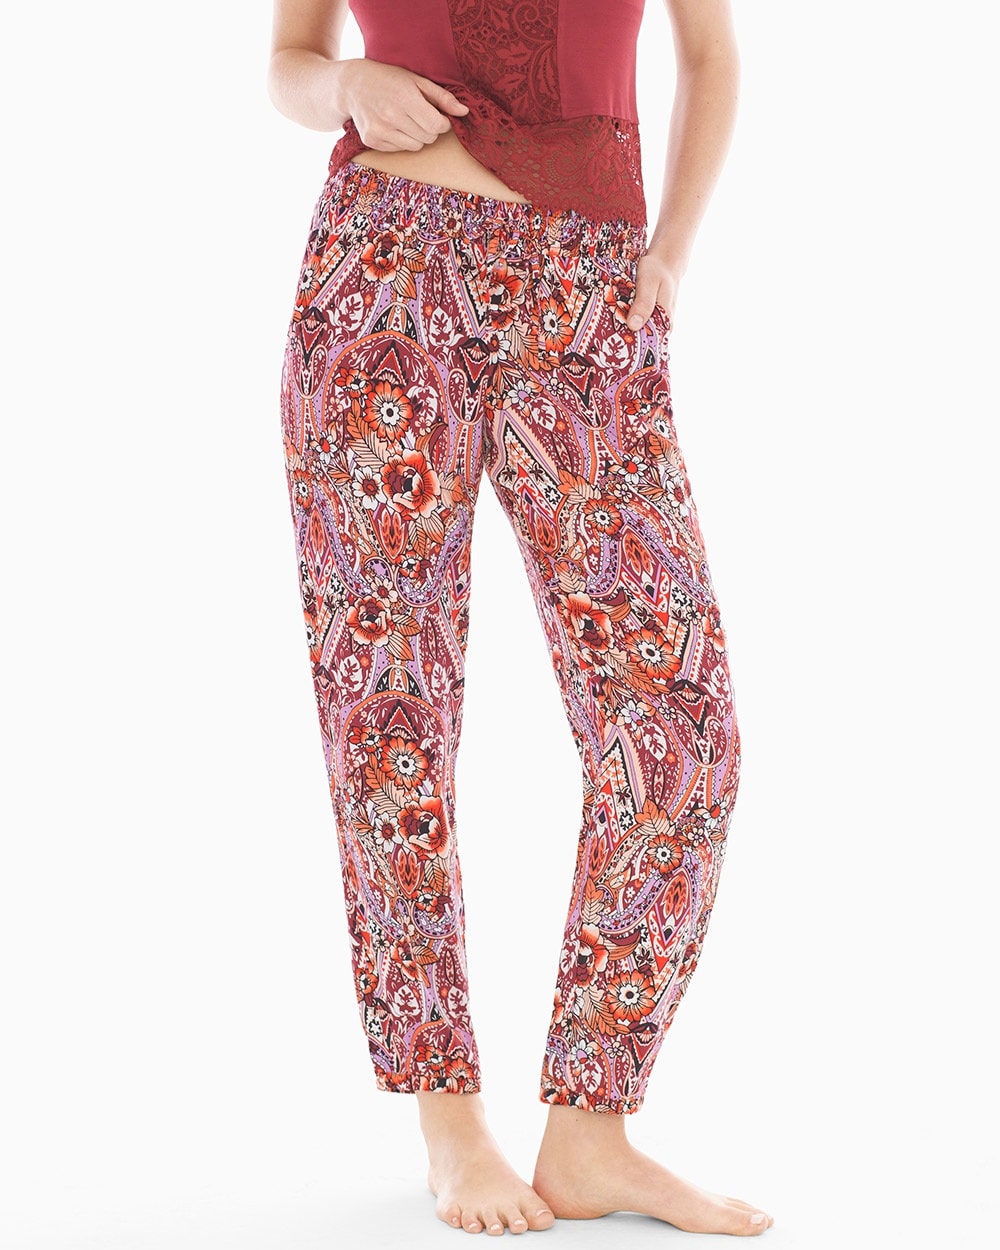 Rayon Challis Banded Ankle Pajama Pants Nomadic Floral Cherrywood